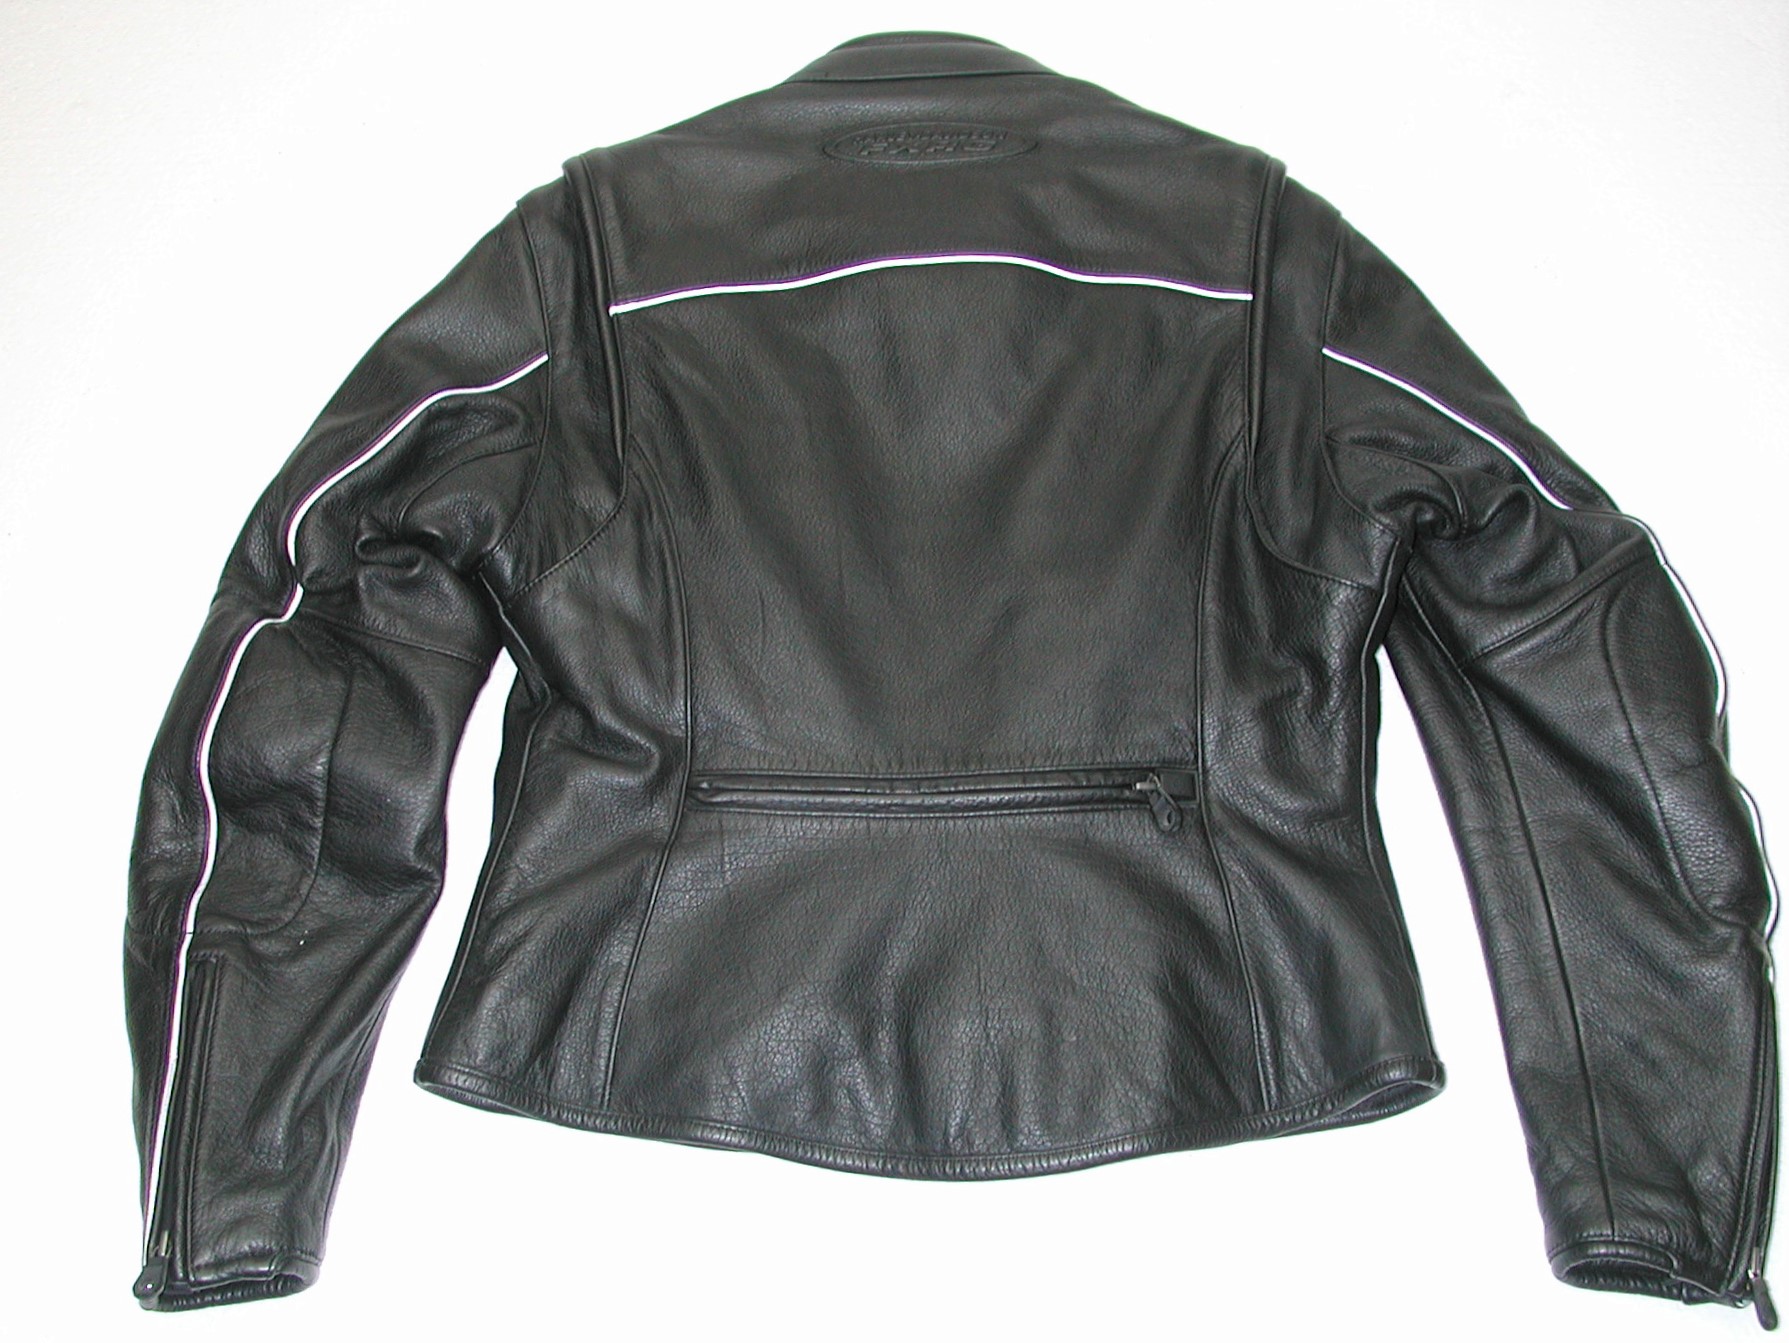 HARLEY DAVIDSON Women's FXRG OEM 98520 Black Leather Motorcycle Biker Jacket  Size:S(4-6)